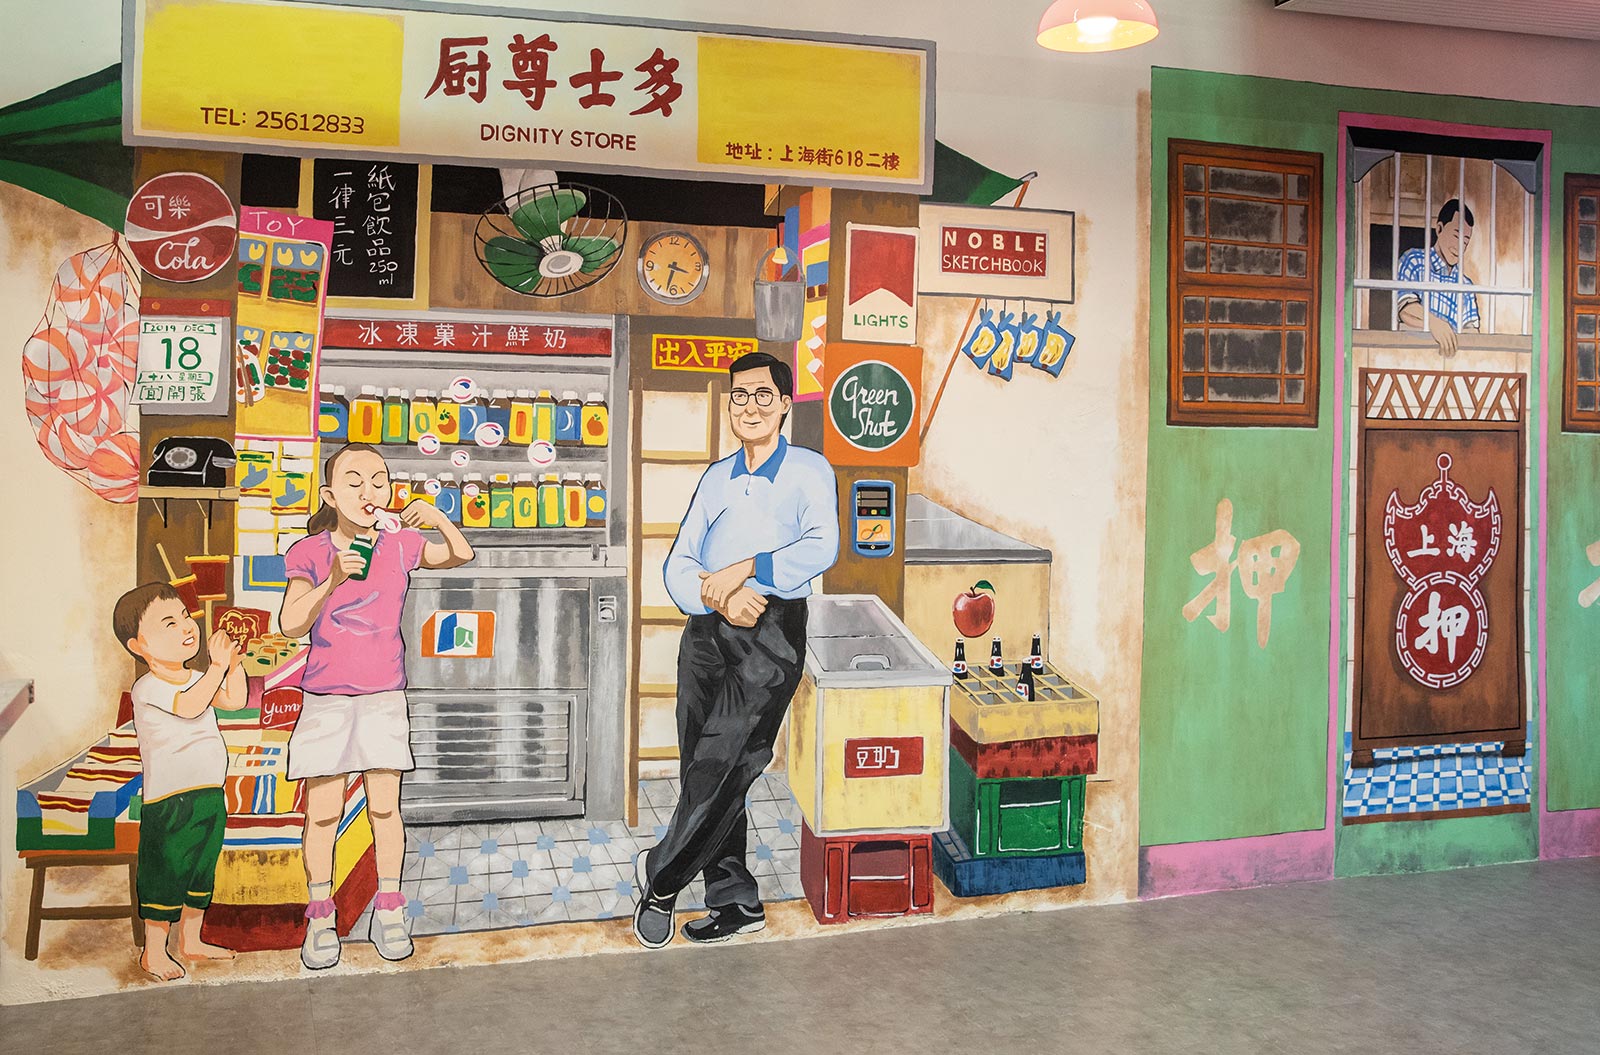 Dignity Kitchen HK wall illustration